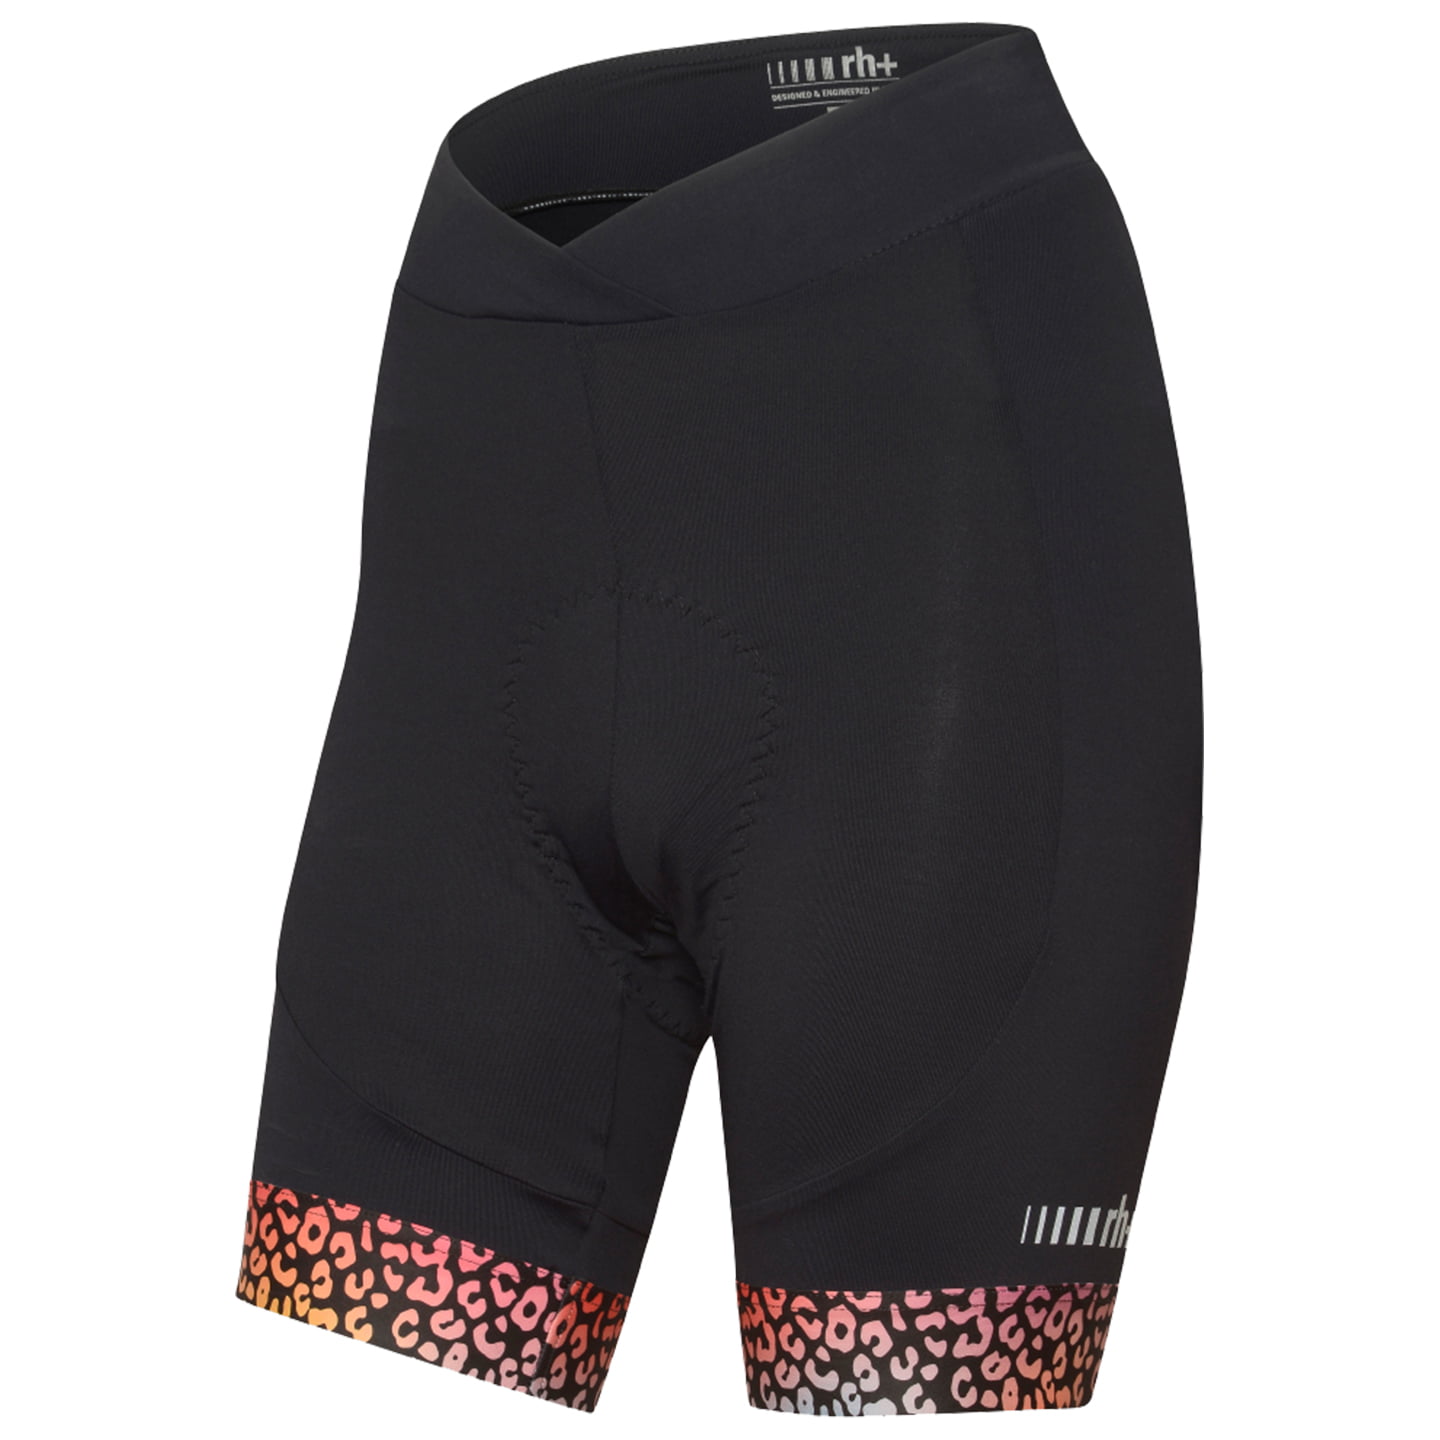 RH+ New Elite Women’s Cycling Shorts Women’s Cycling Shorts, size L, Cycle shorts, Cycling clothing